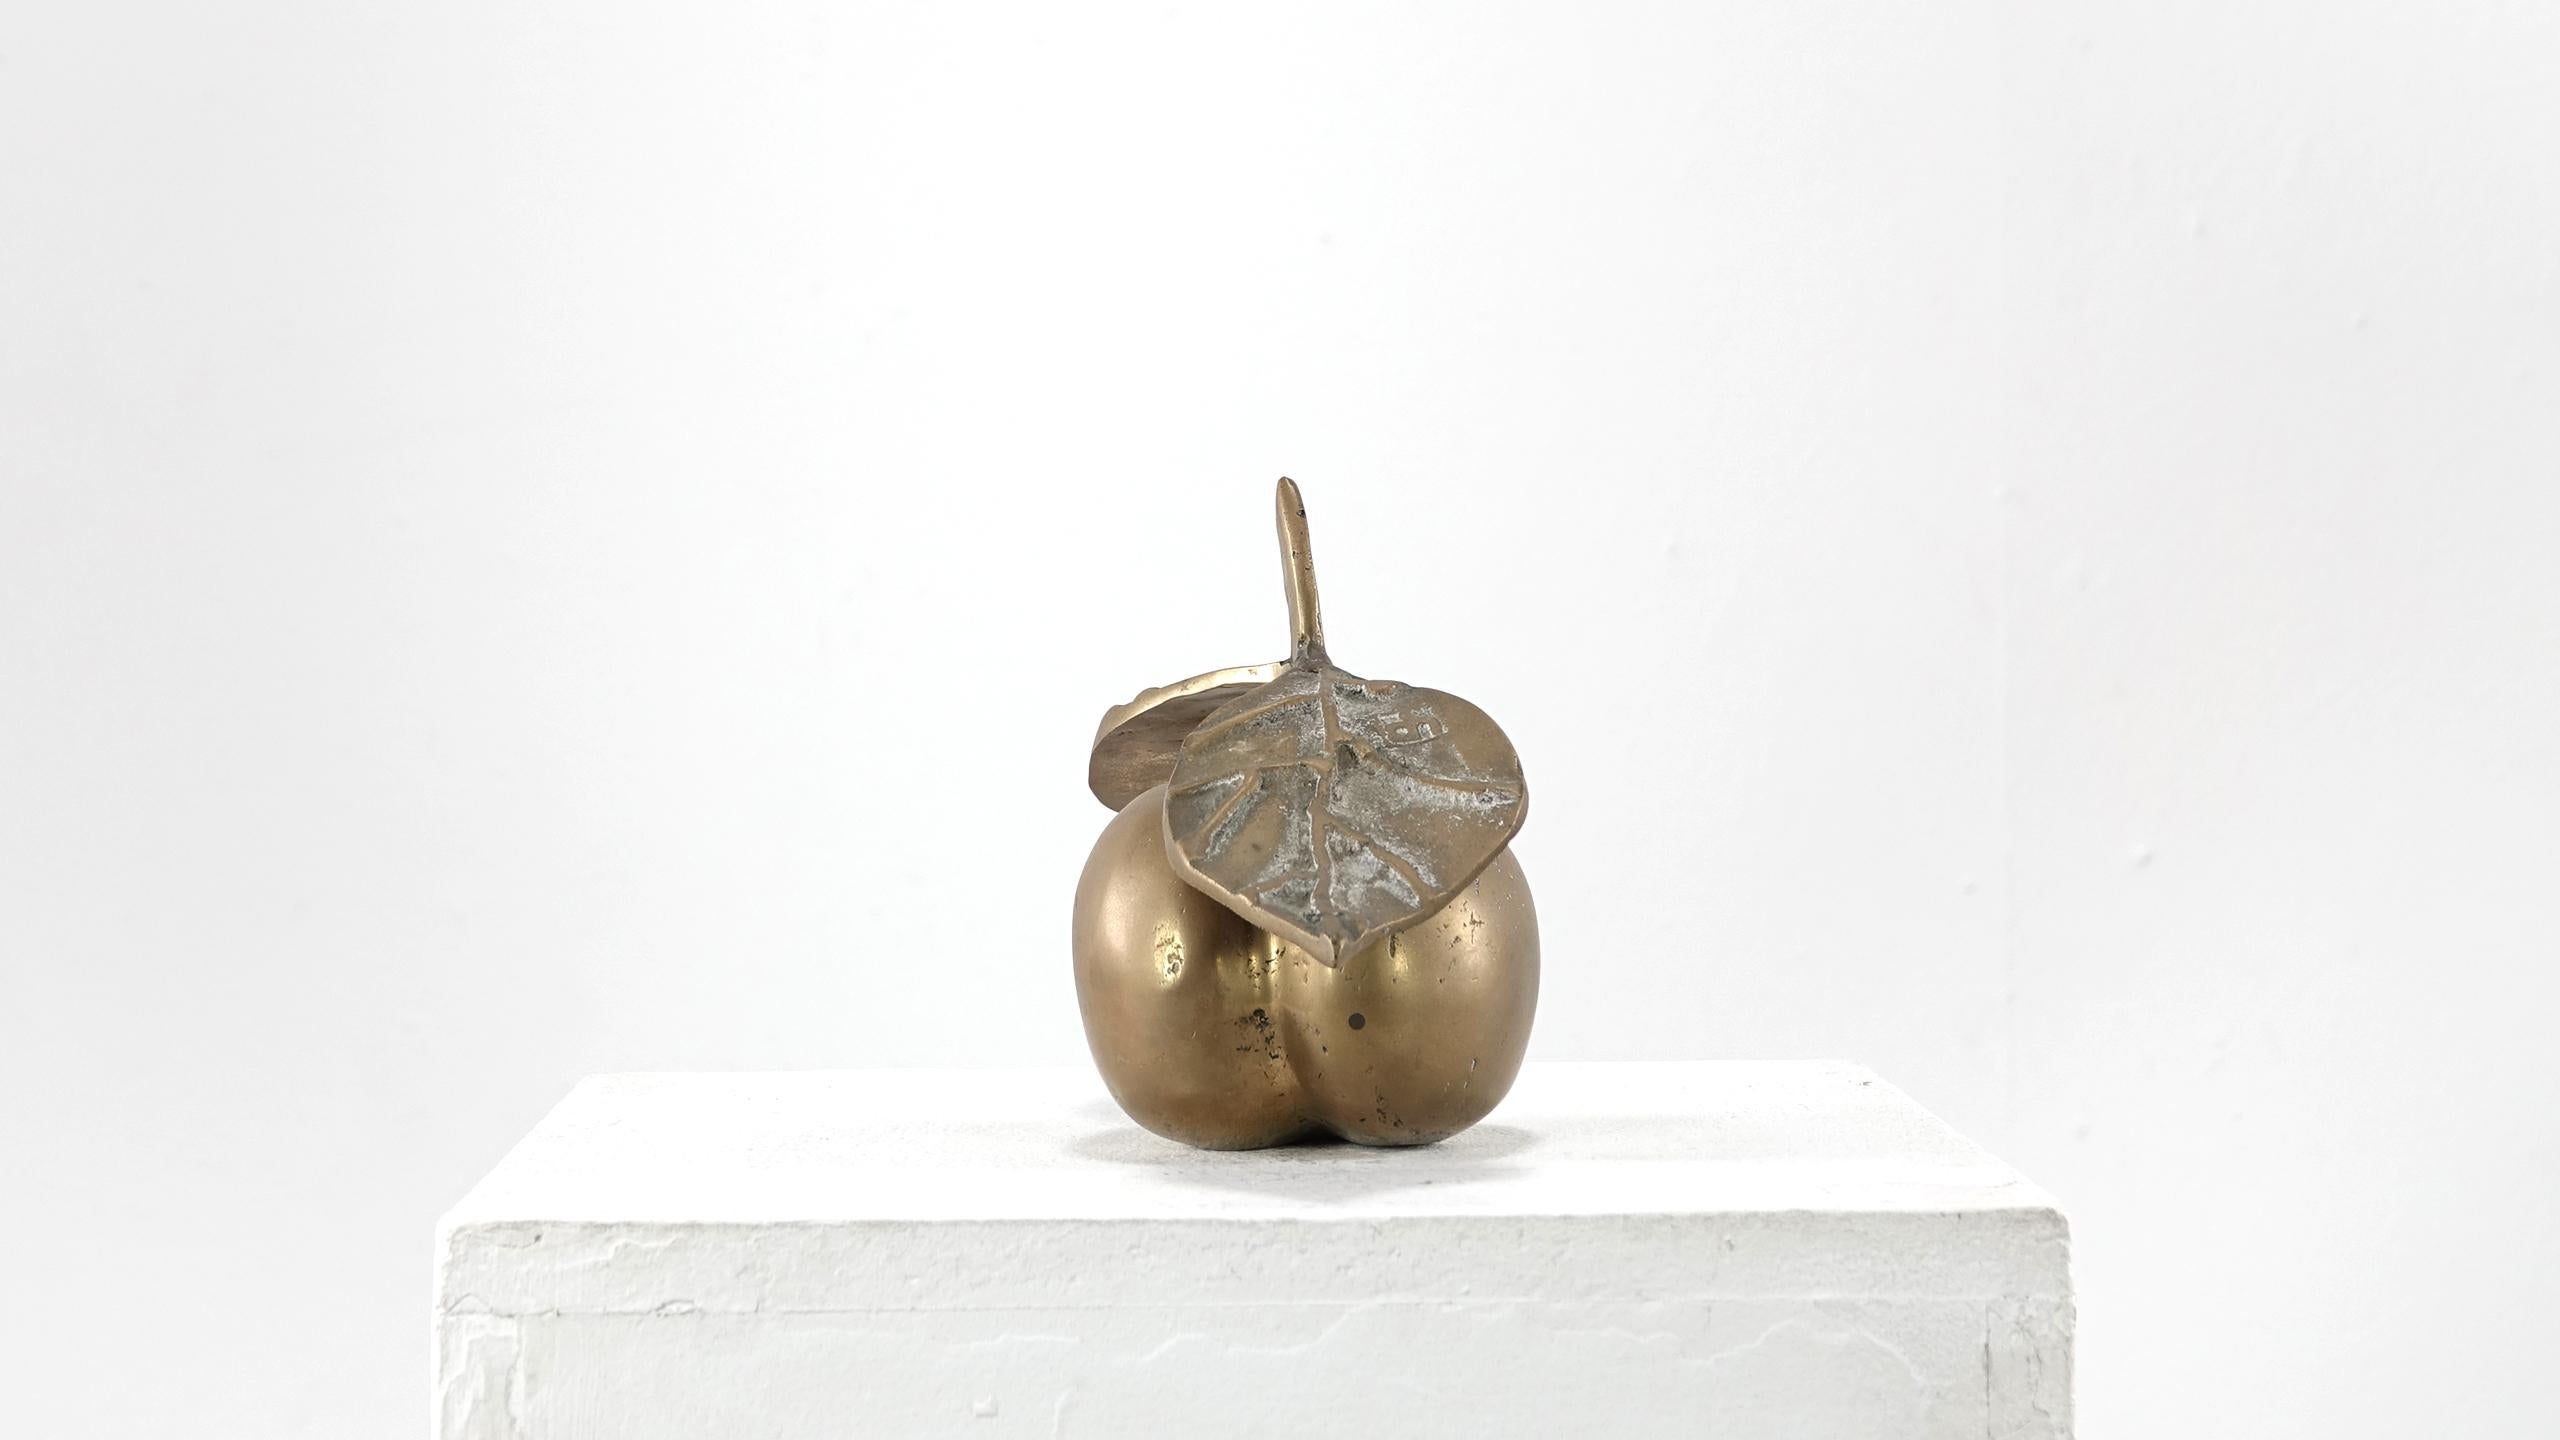 David Marshall Desenos Brass Apple Sculpture 3